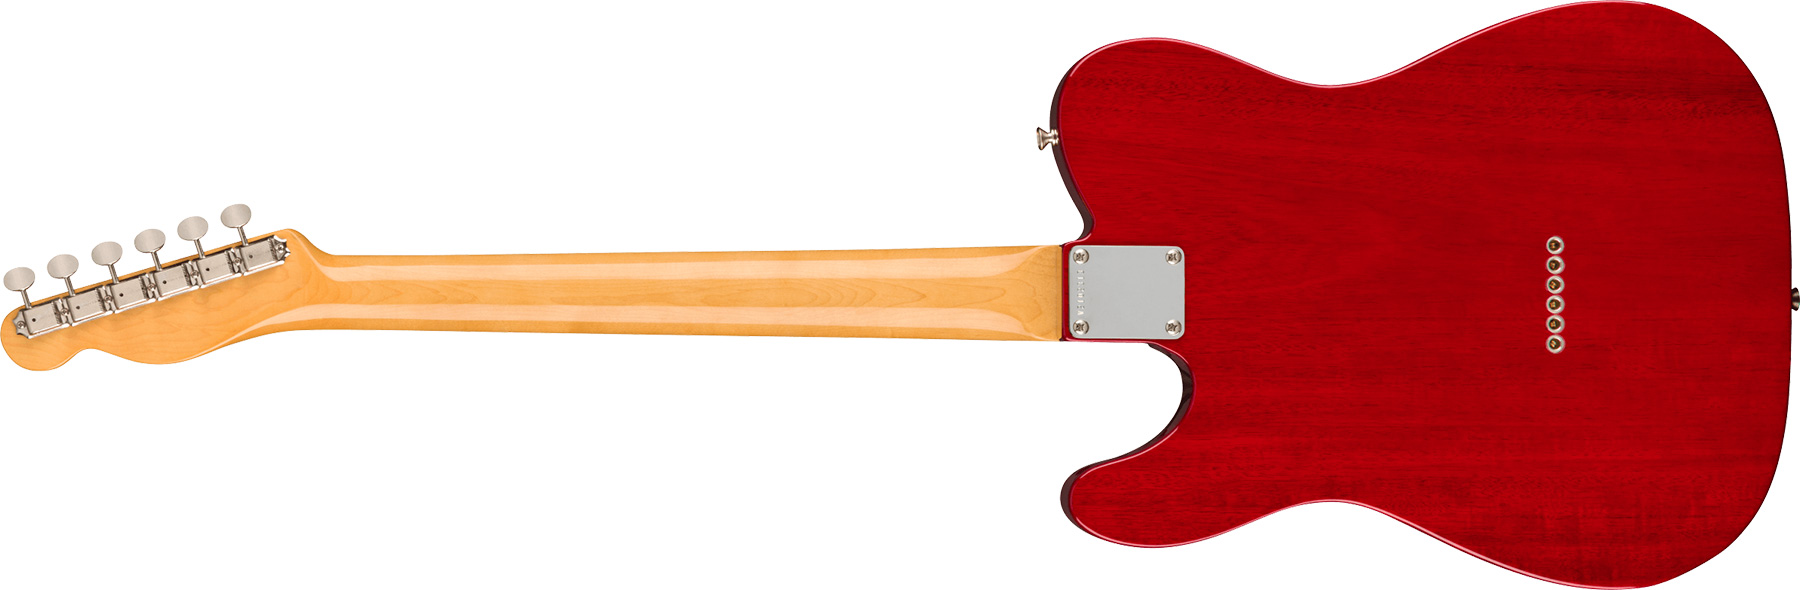 Fender Tele 1963 American Vintage Ii Usa 2s Ht Rw - Crimson Red Transparent - Guitarra eléctrica con forma de tel - Variation 1